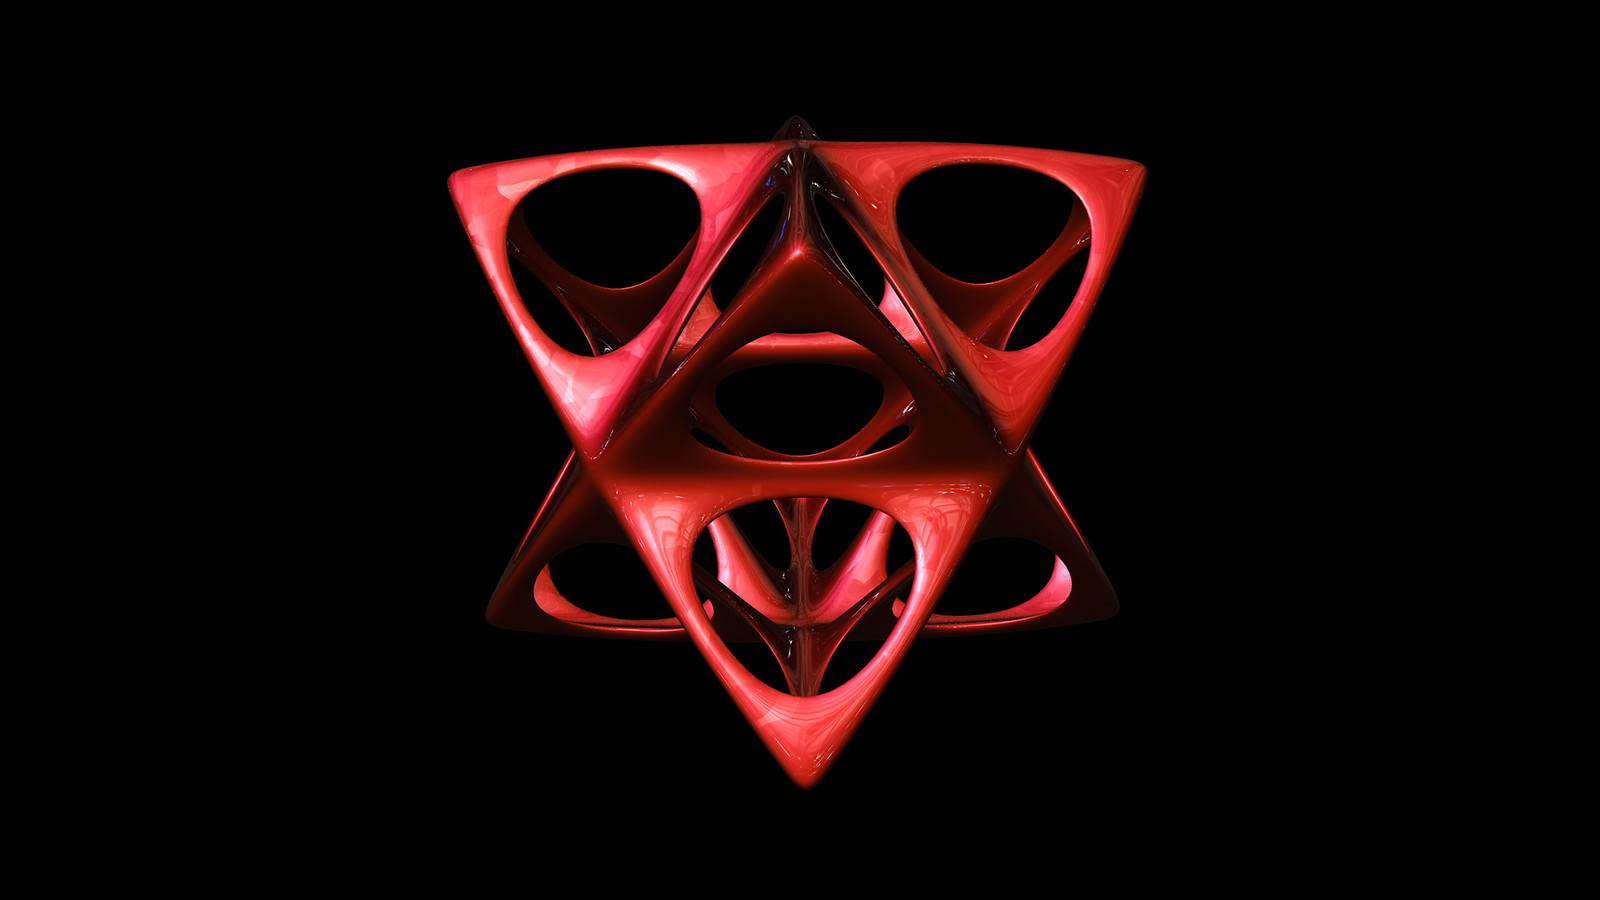 octahedron spiky soft